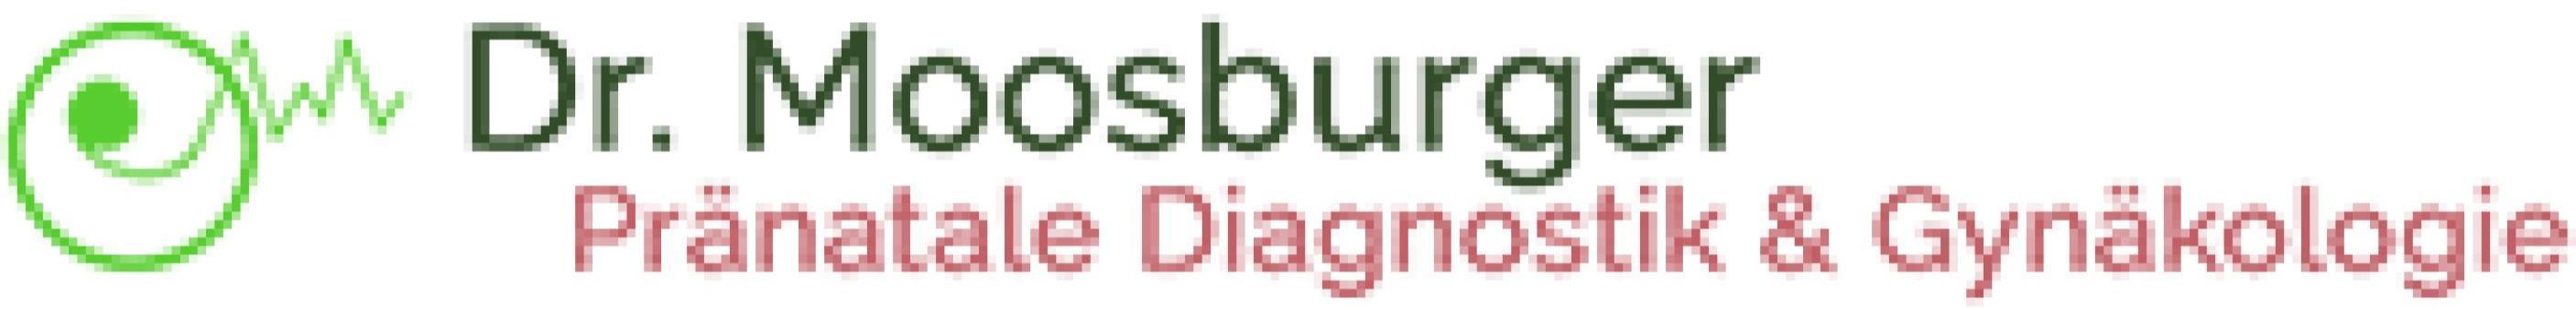 Logo Dr. Dietmar Moosburger - pränatale Diagnostik und Gynäkologie